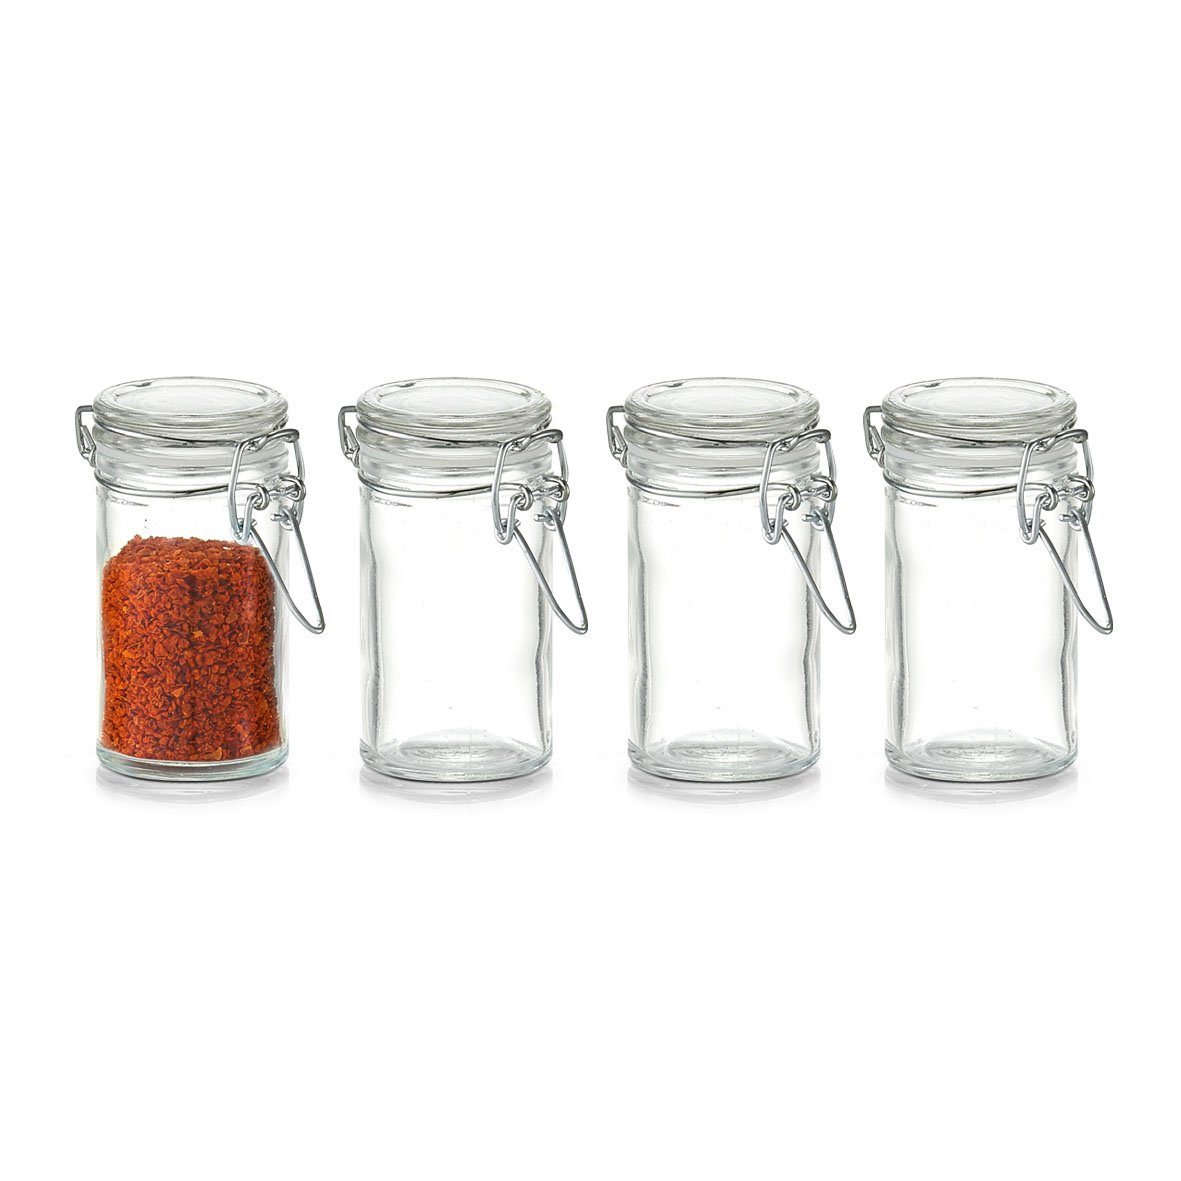 Zeller mini Gewürzgläser-Set 4-tlg., Present Glas/Metall, m. Gewürzbehälter Bügelverschluss,